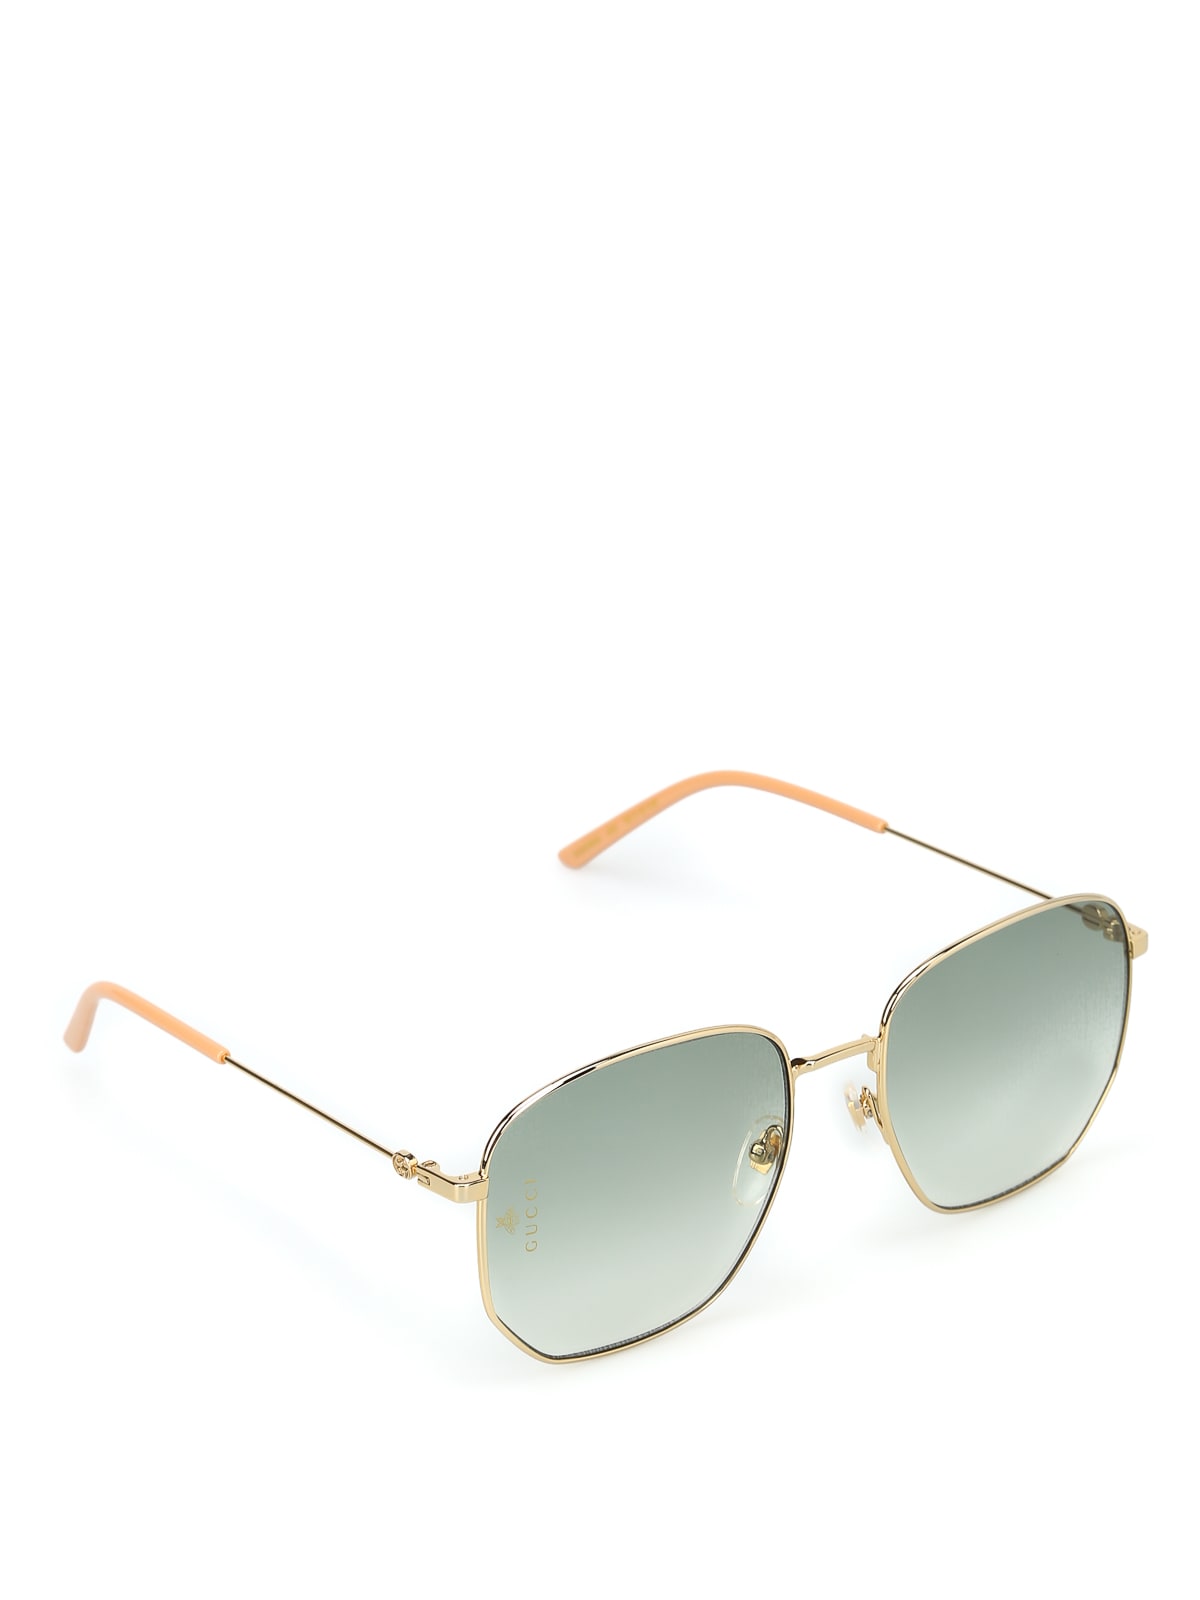 Gucci Gg0396s Sunglasses In Gold Gold Green